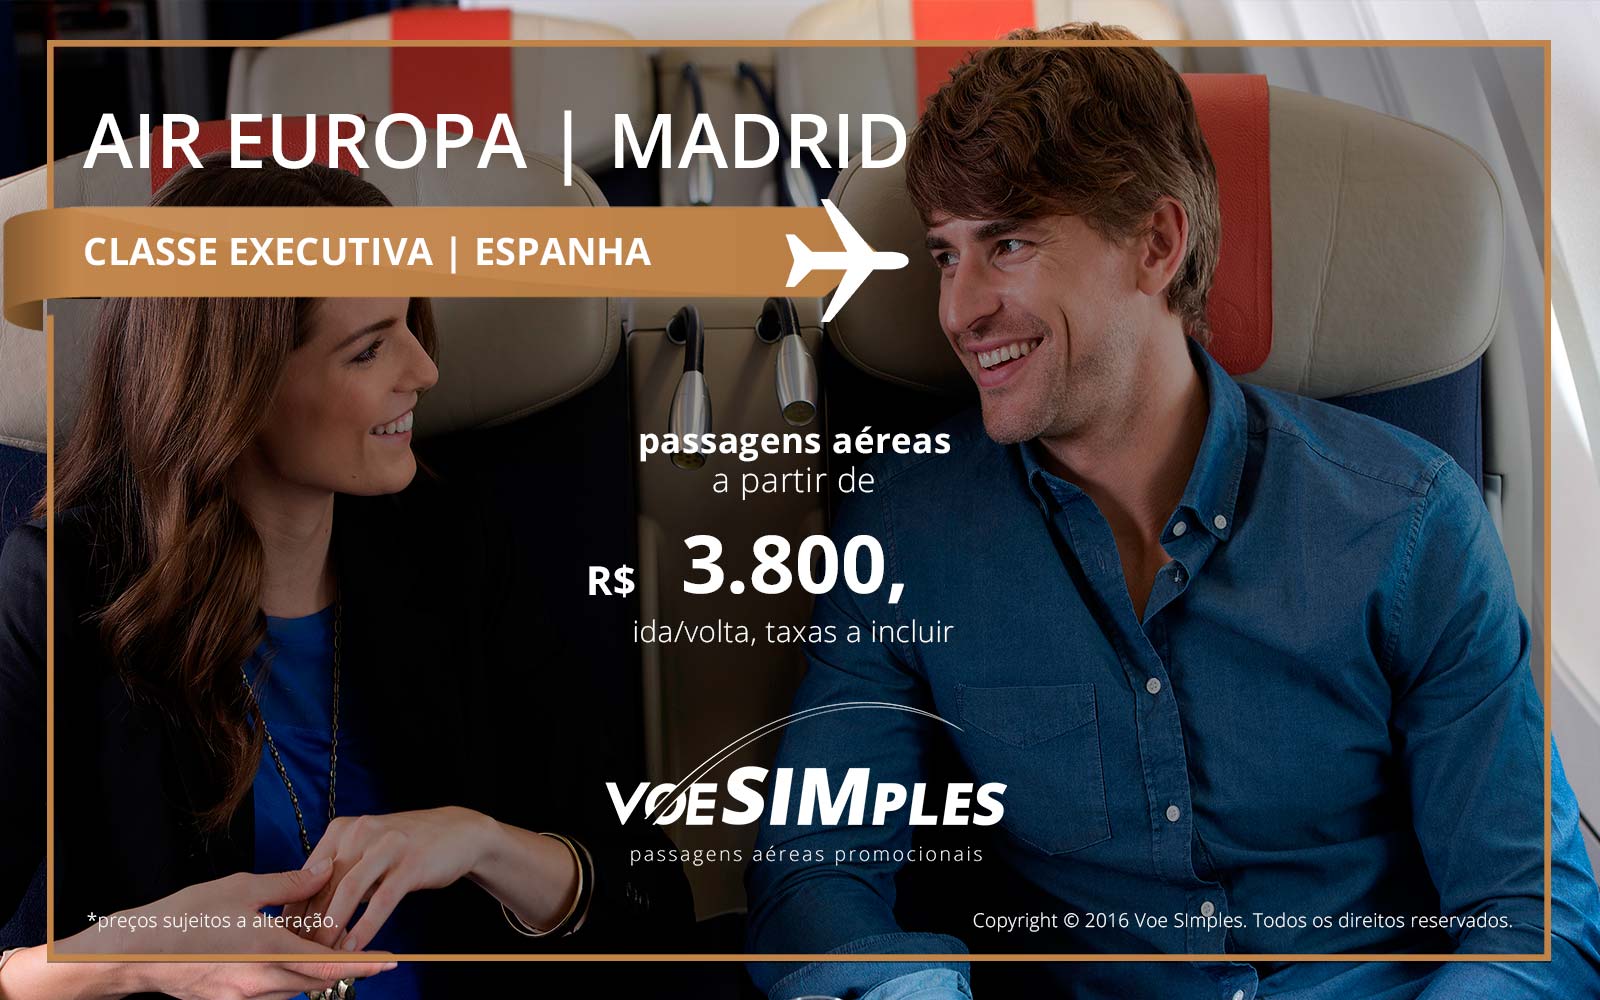 Passagem aérea Classe Executiva Air Europa para Madri